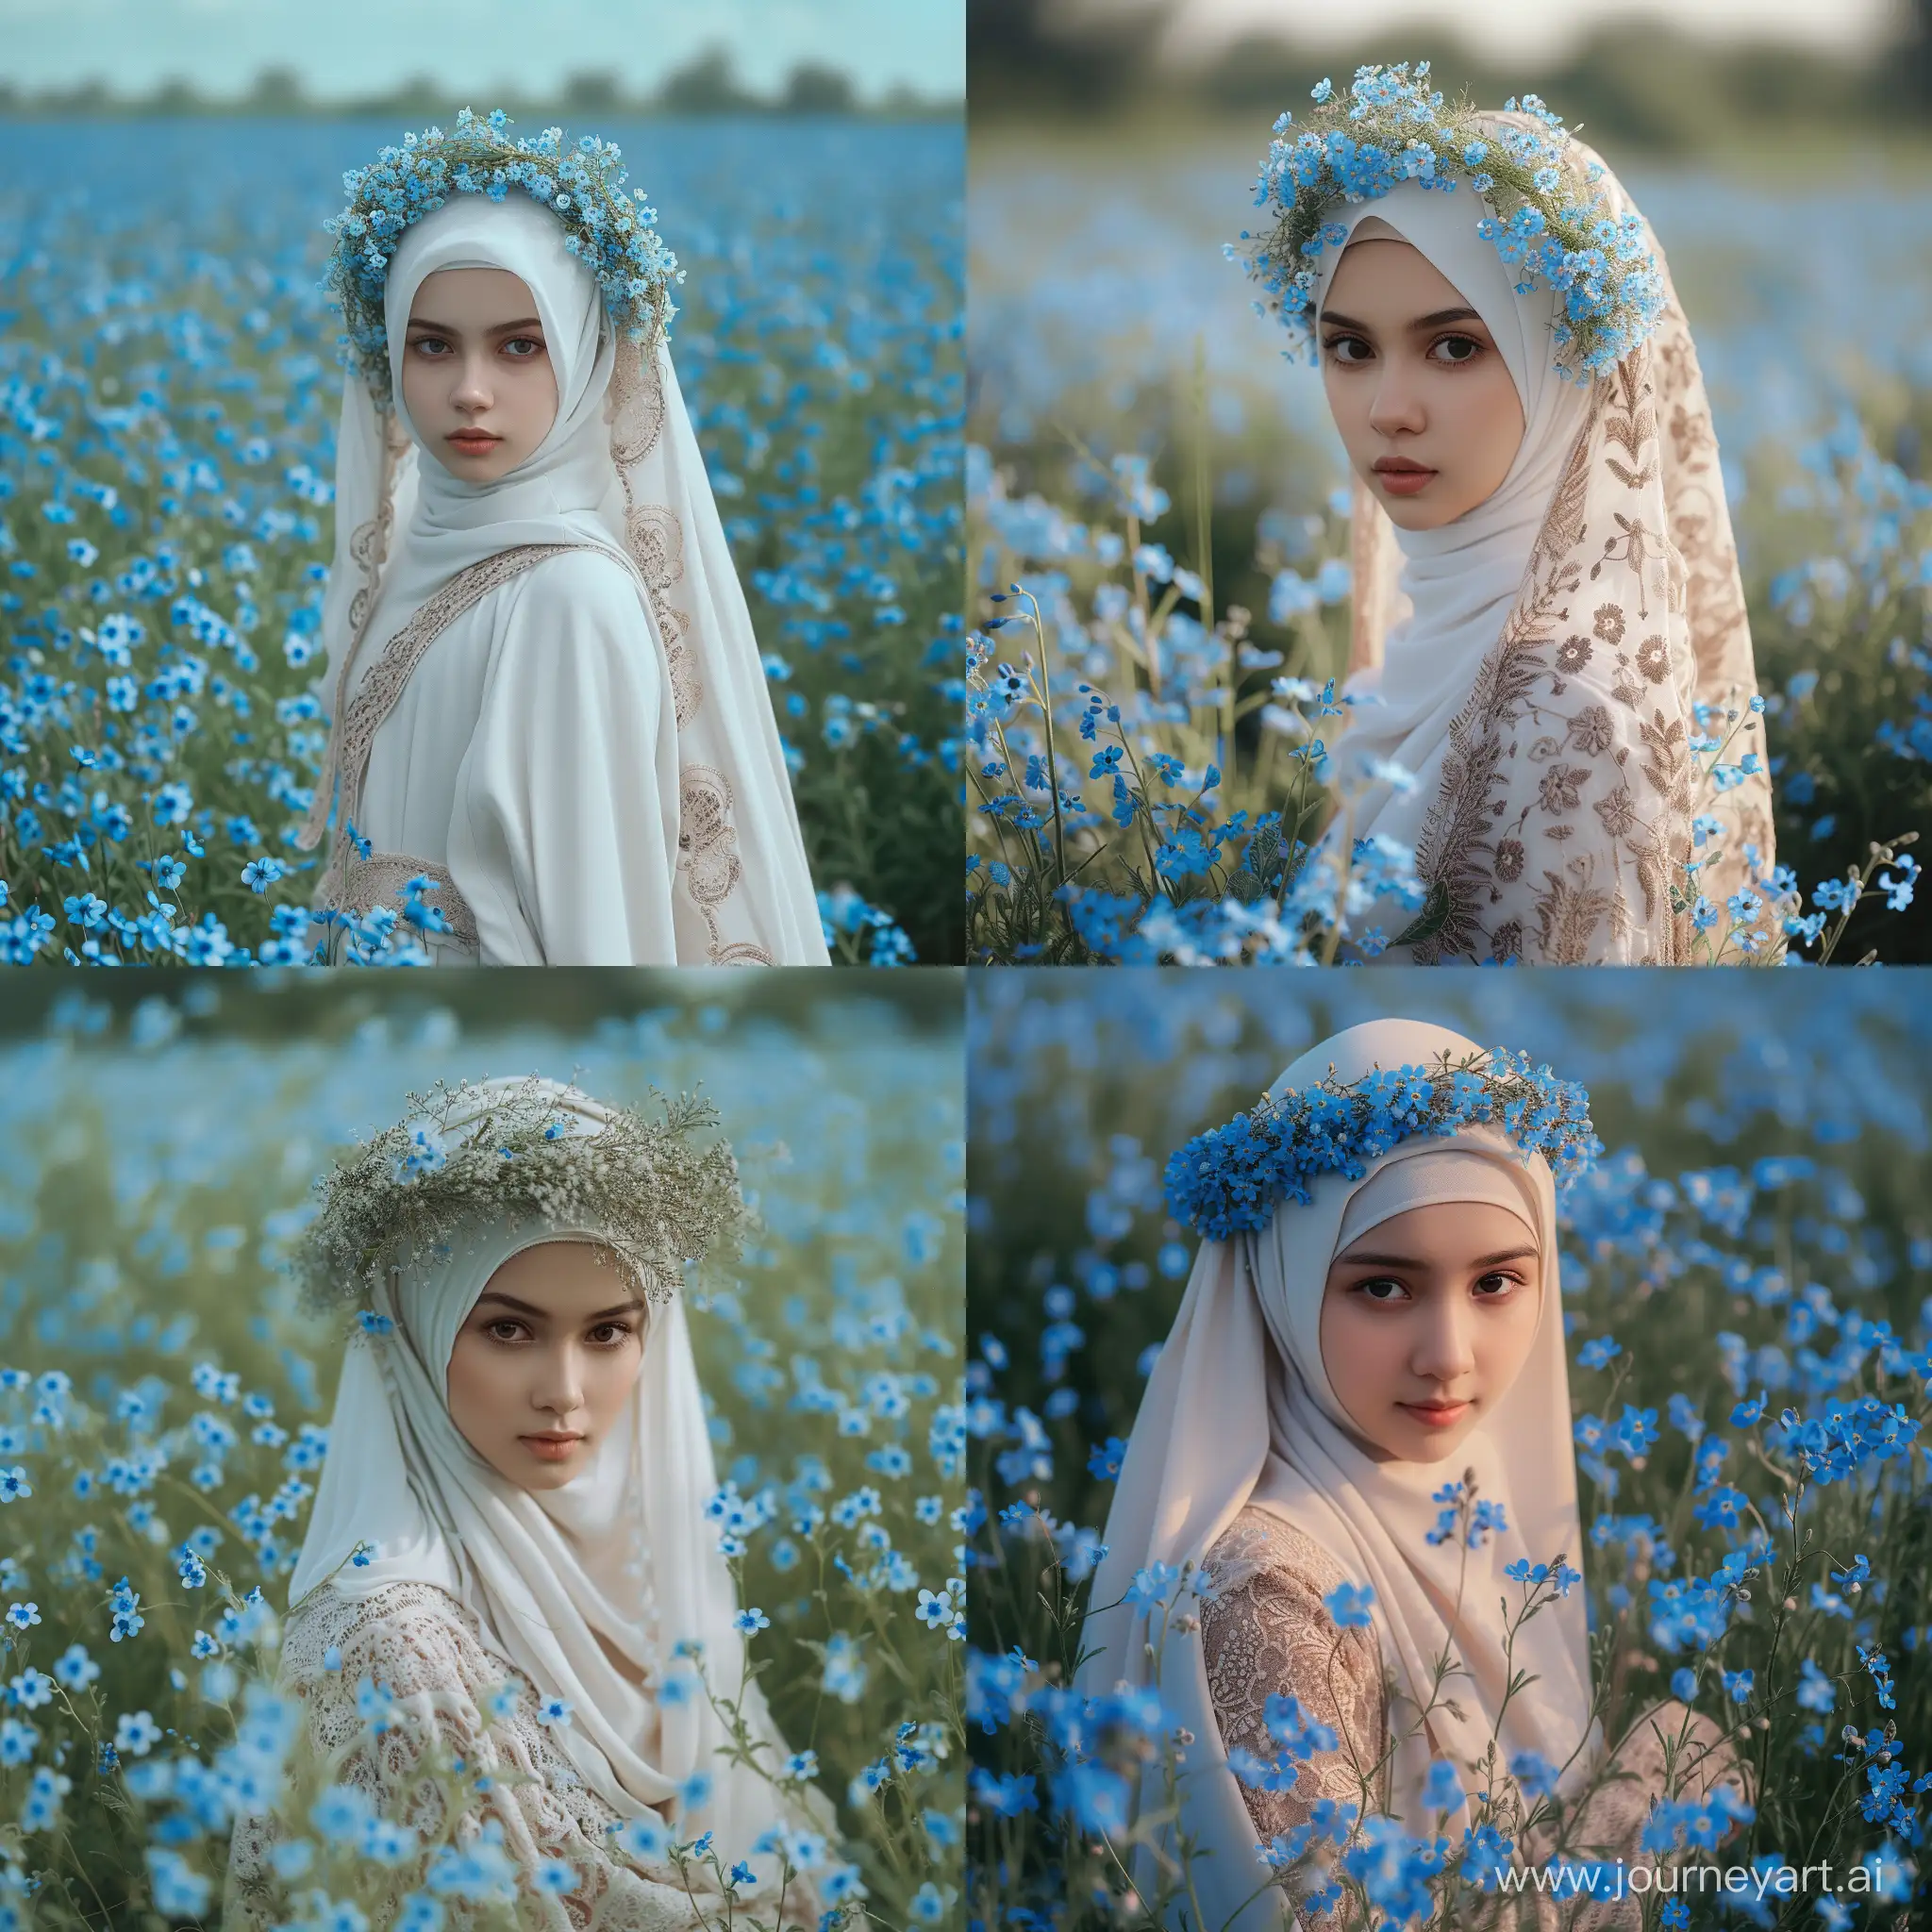 Charming-Sundanese-Girl-in-White-Hijab-Dress-amid-ForgetMeNots-Field